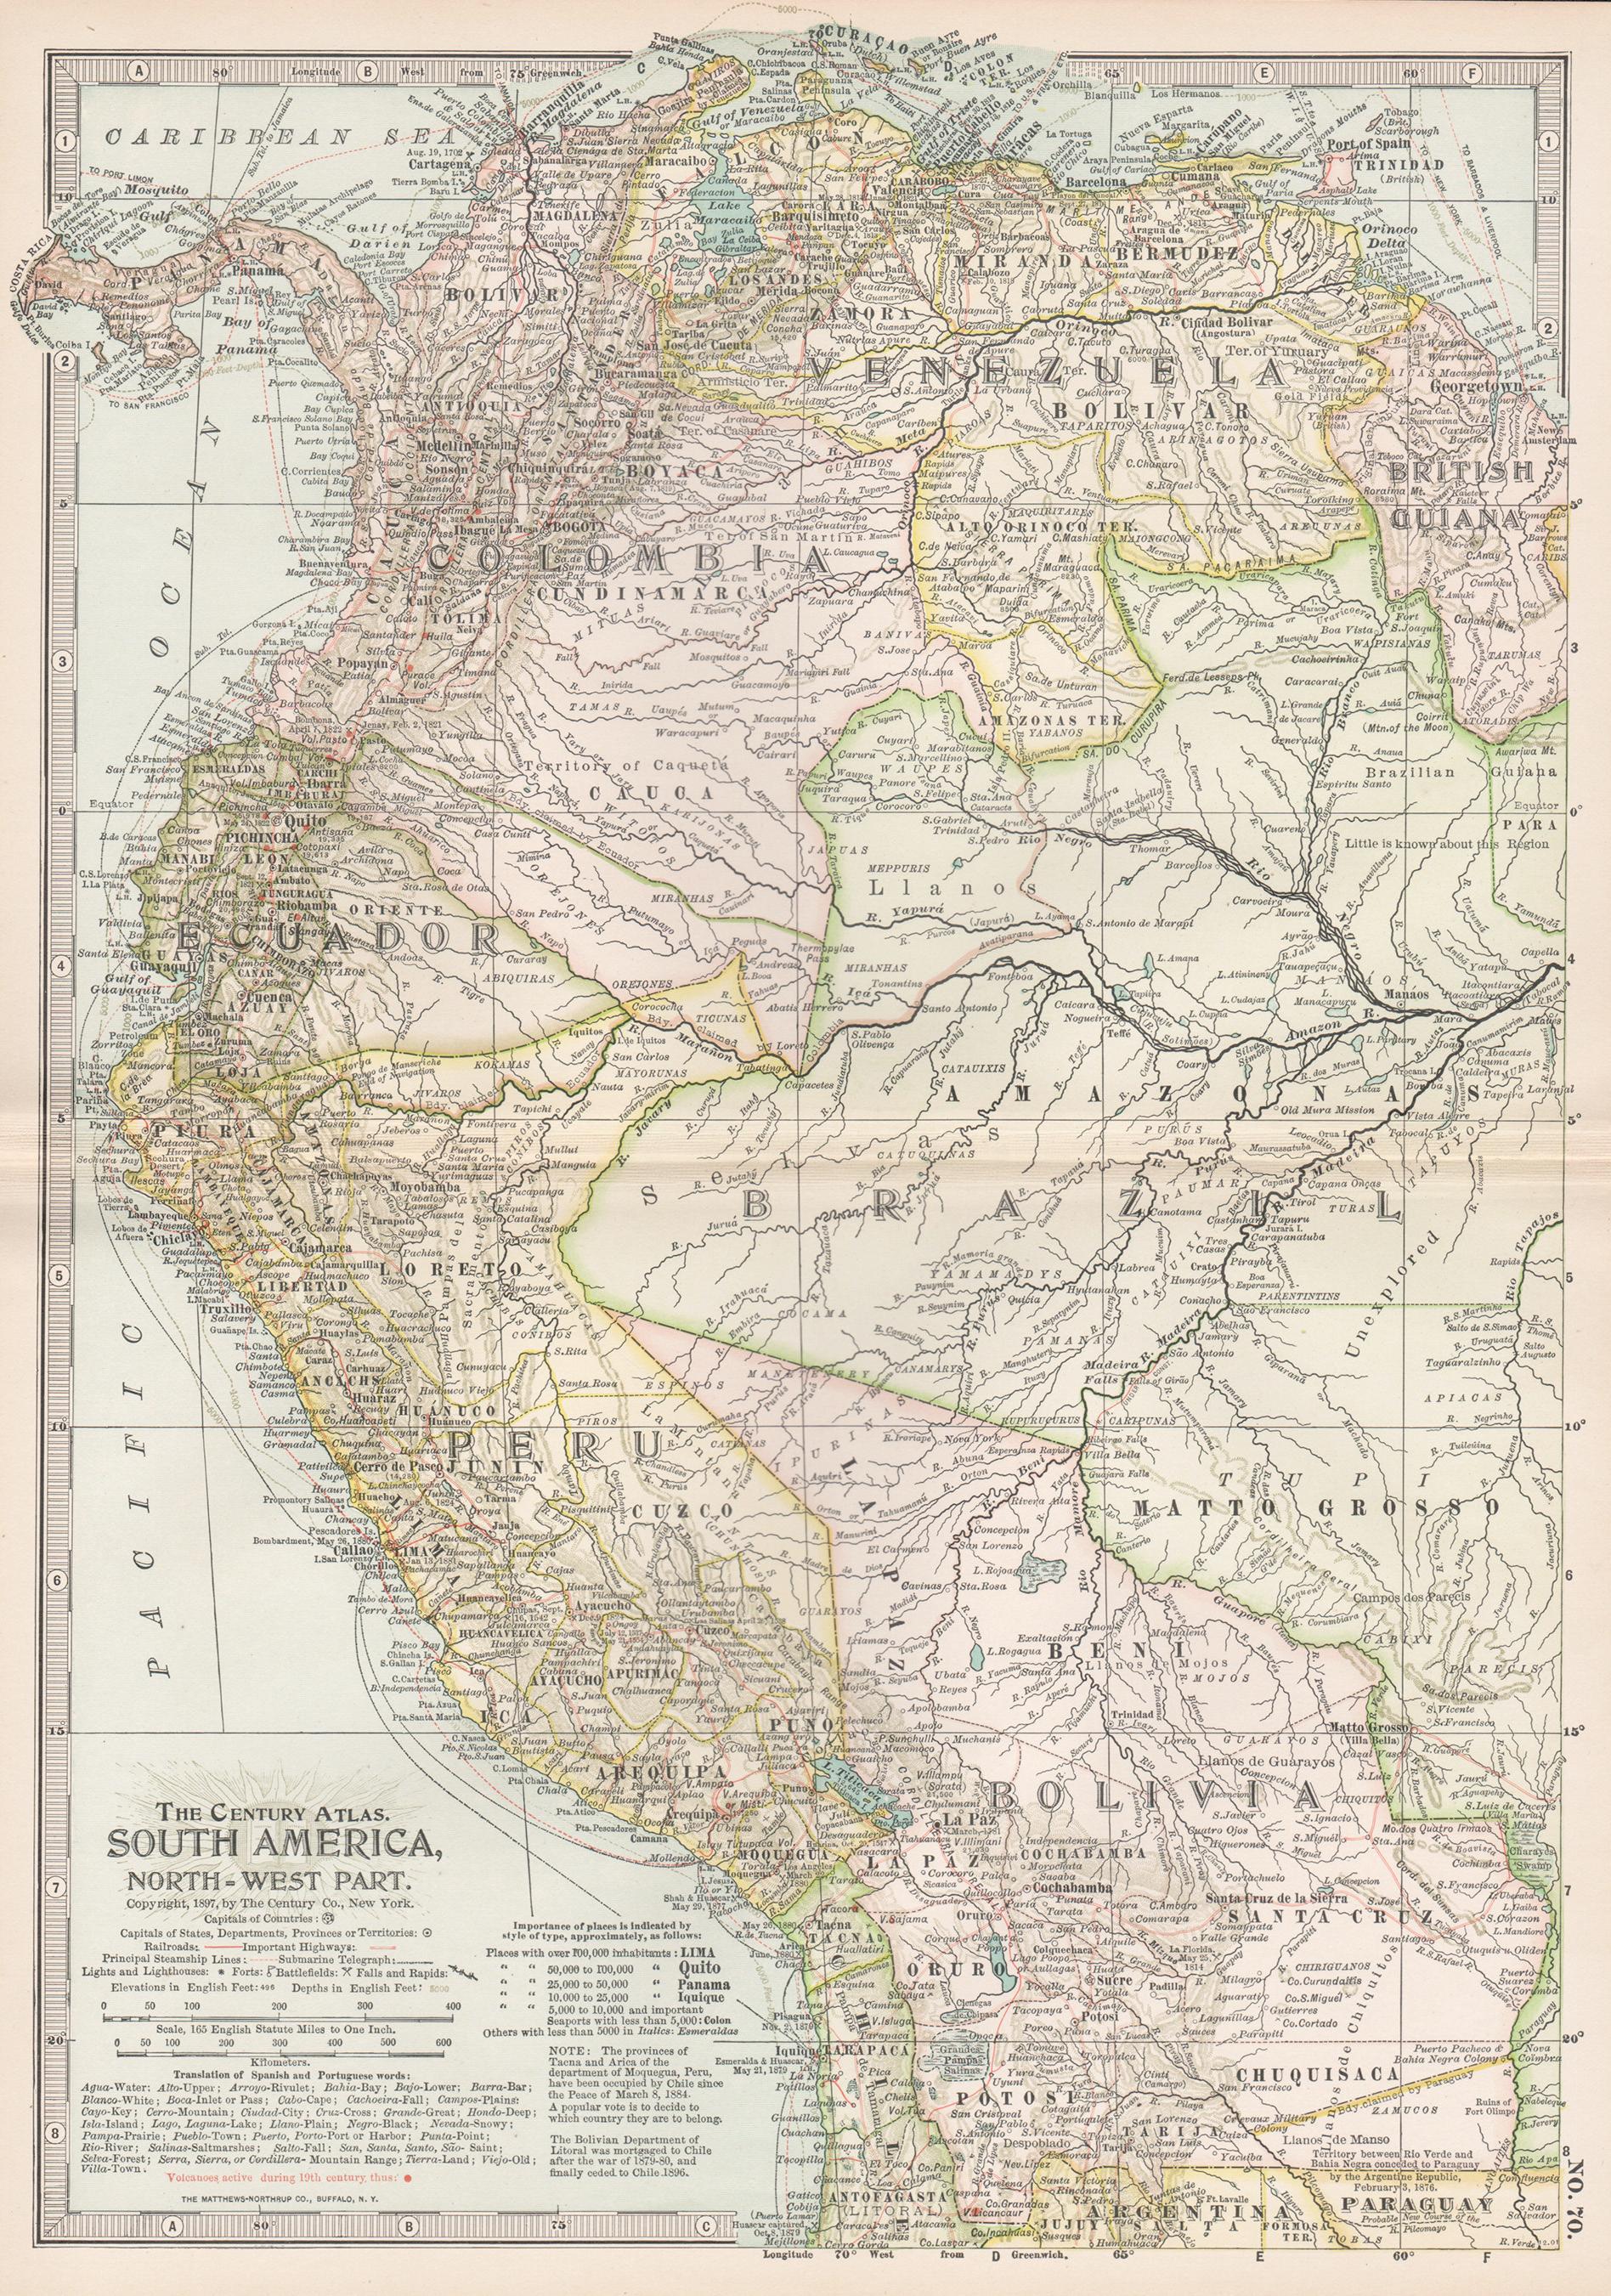 Unknown Print - South America, North-West Part. Century Atlas antique vintage map